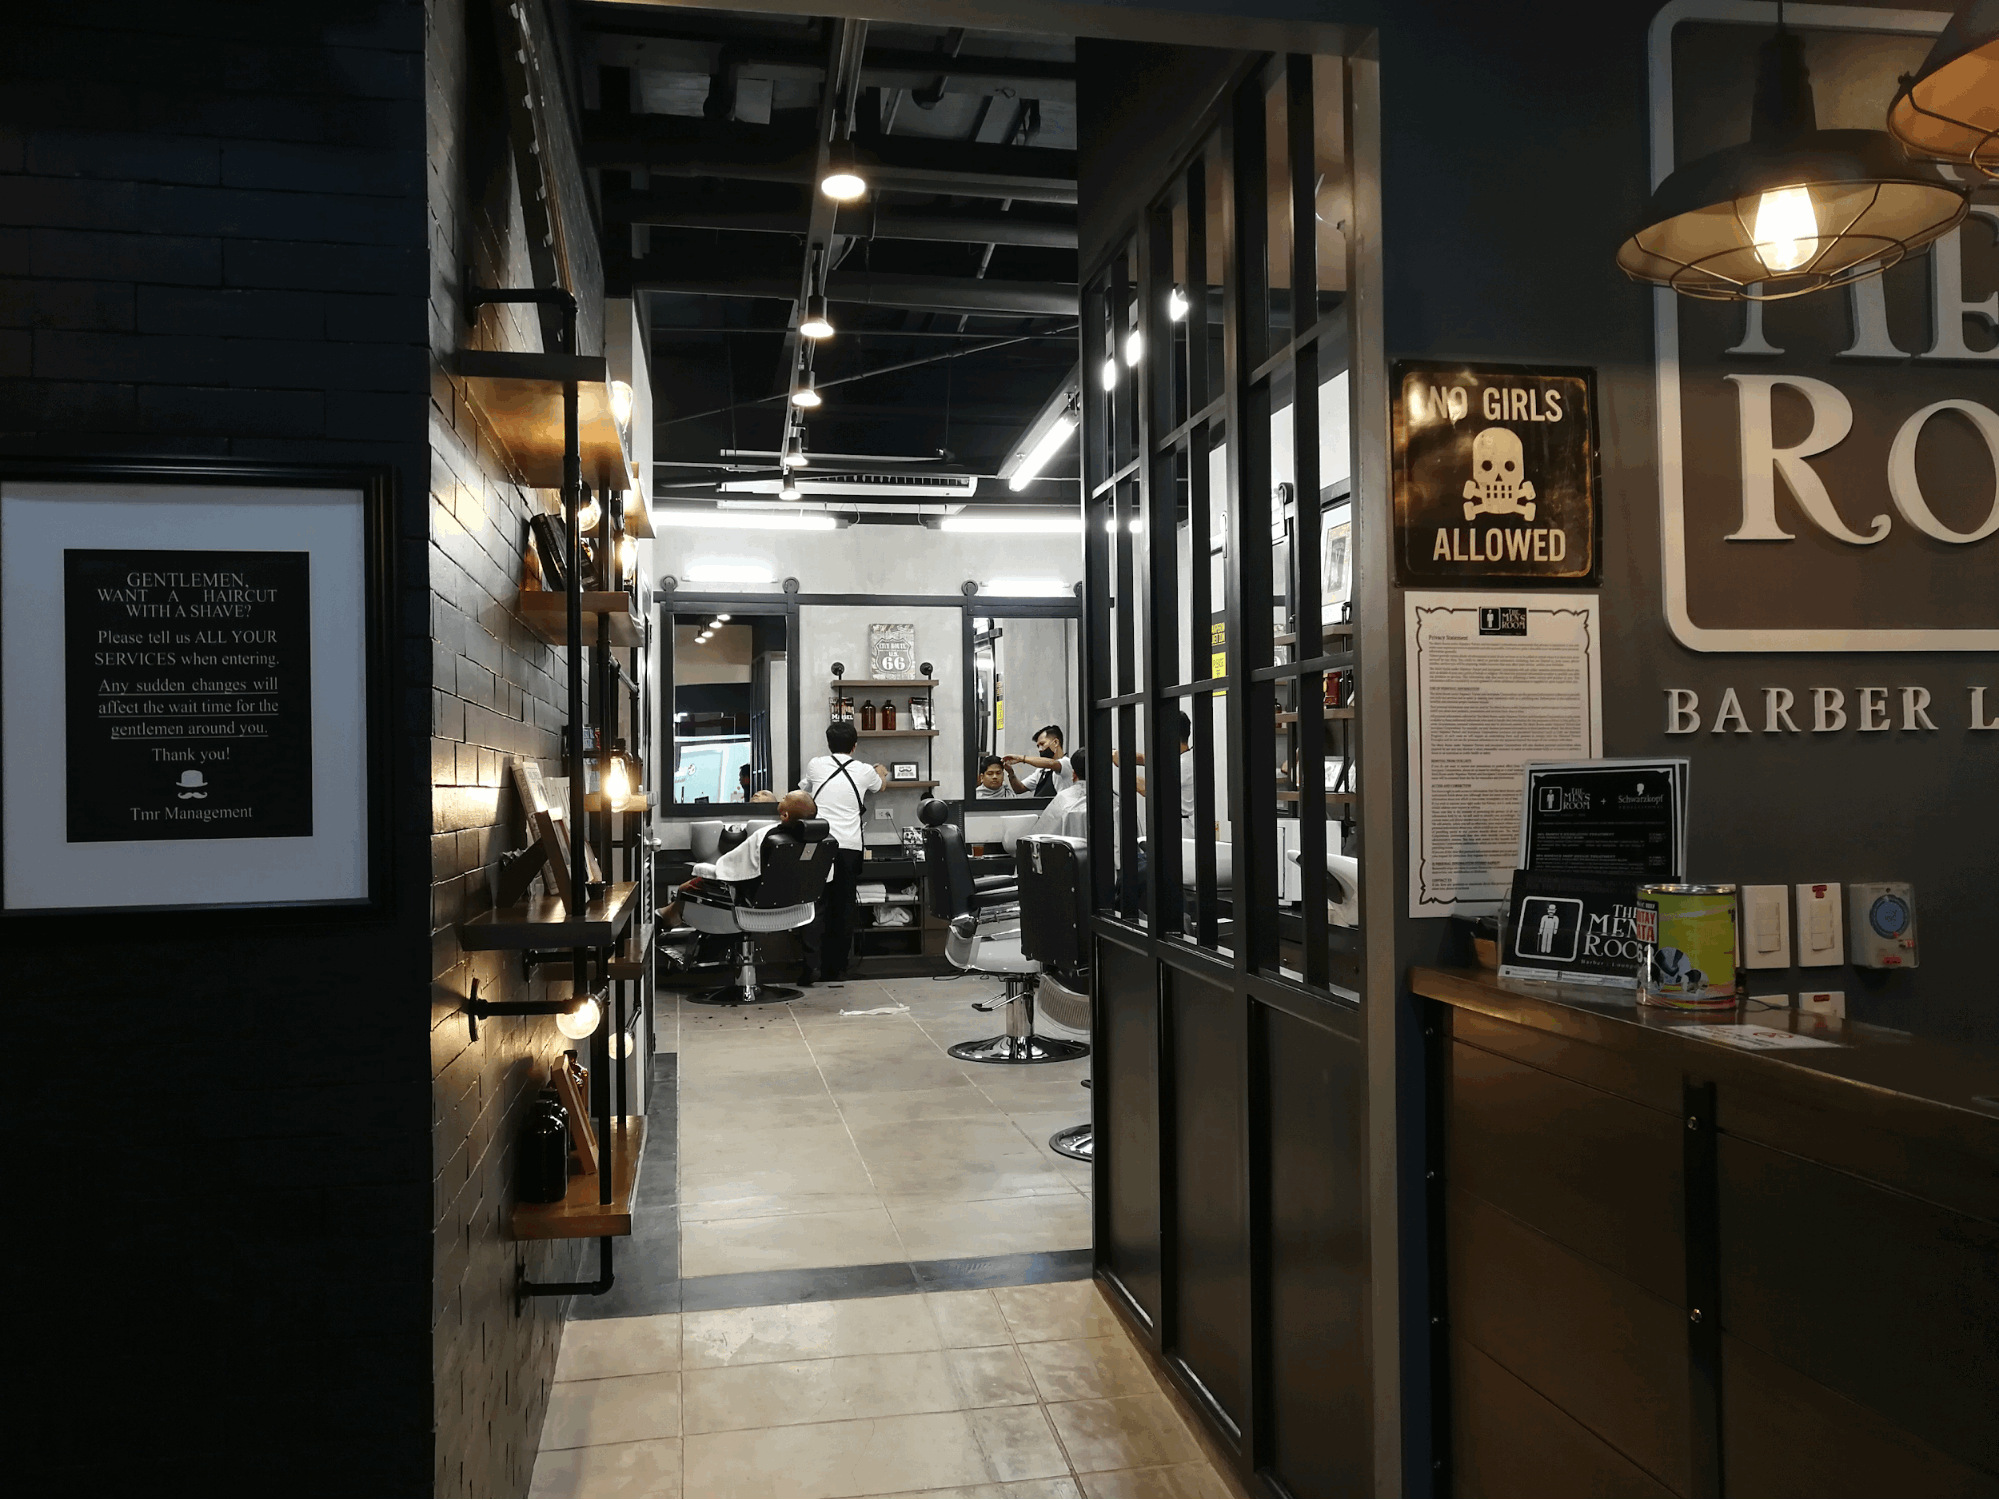 Barber shops Metro Manila - The Men's Room